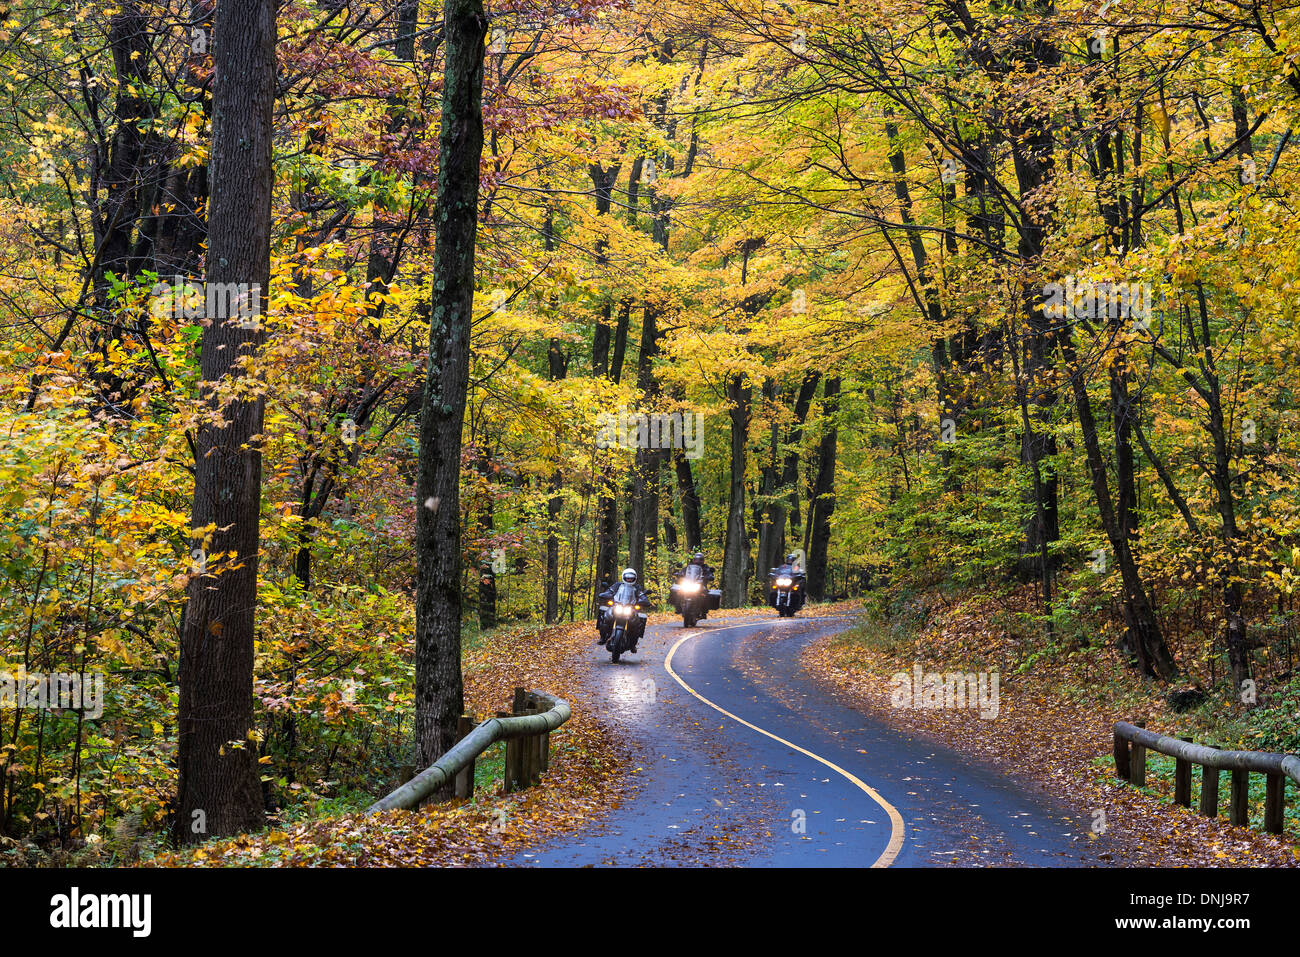 Motorcyclists on rural autumn road, Mt. Greylock State Reservation, Massachusetts, USA Stock Photo